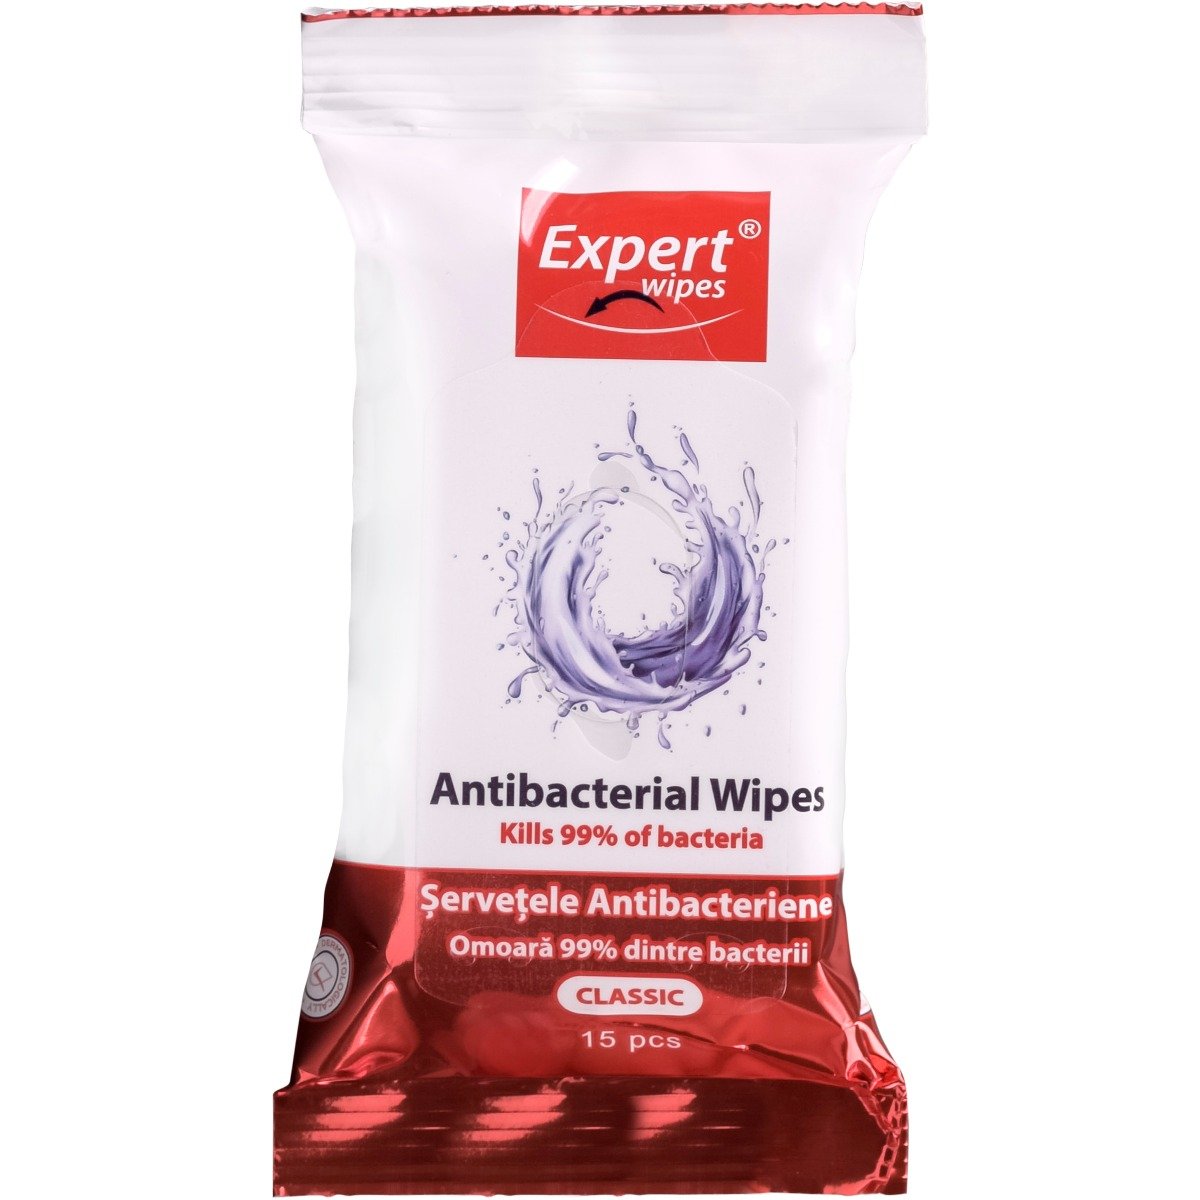 Servetele antibacteriene Expert Wipes Clasic, 15 buc Expert Wipes imagine 2022